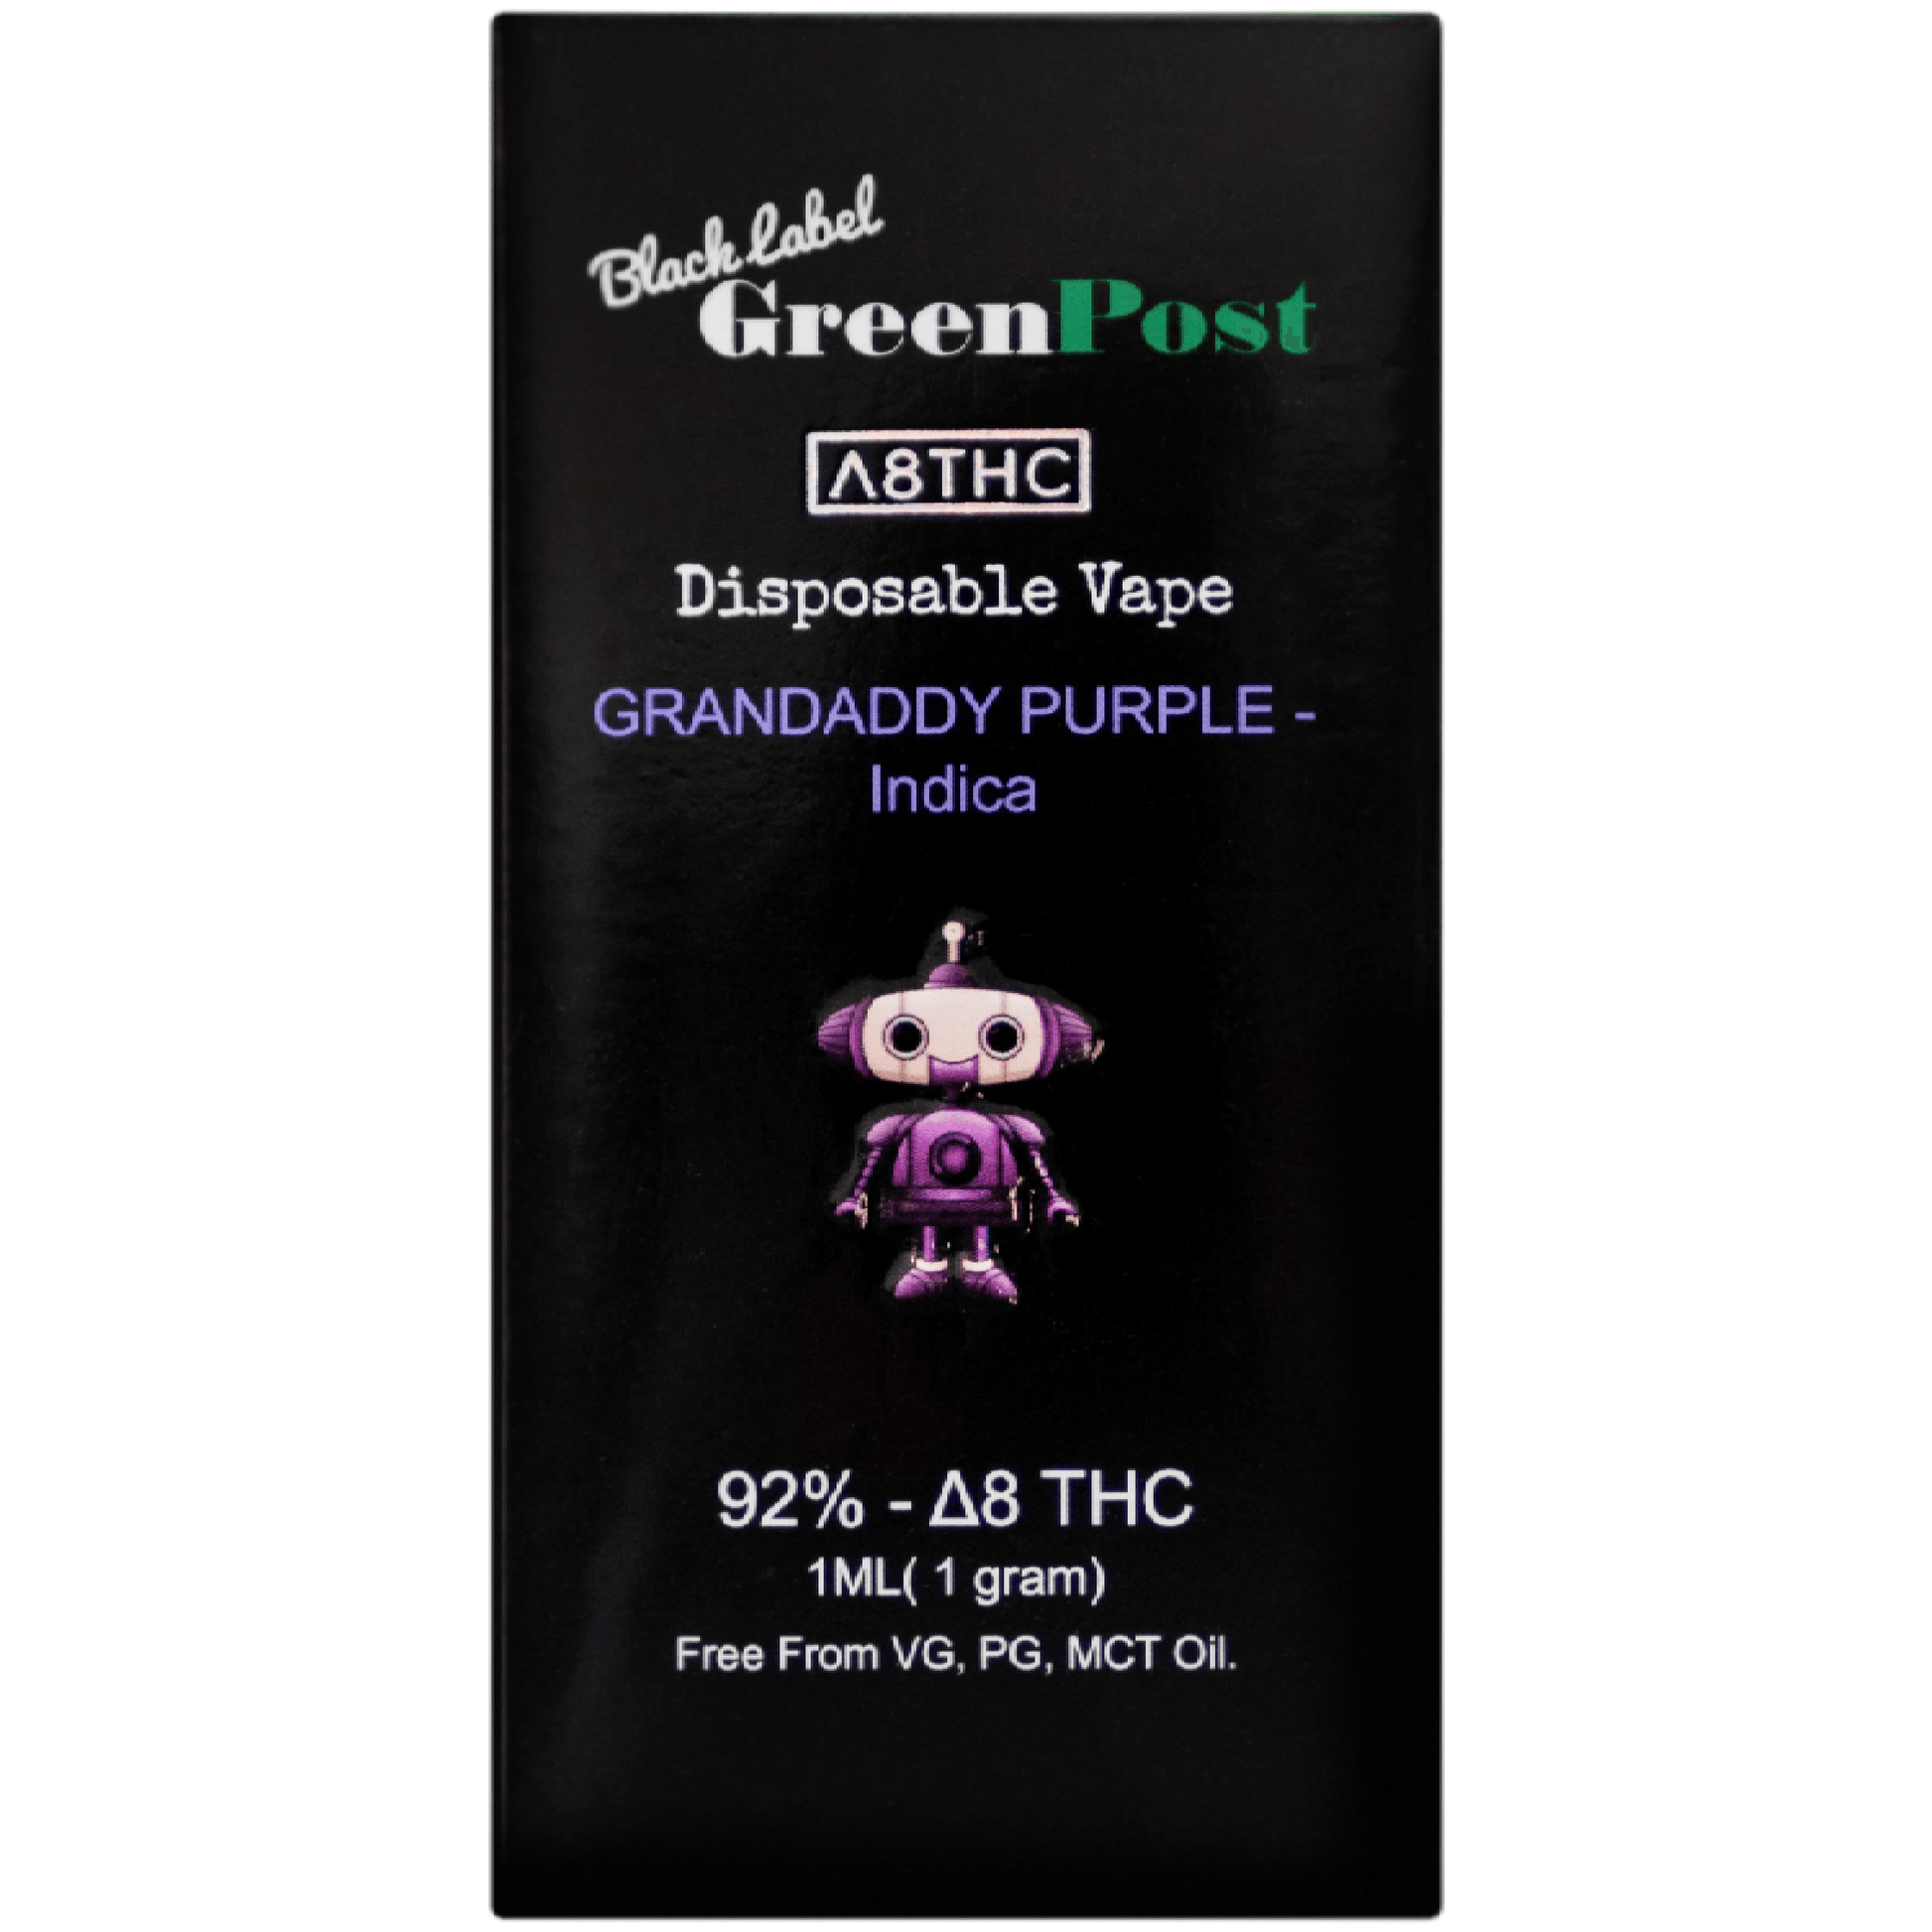 Delta 8 THC Disposable Pen - Granddaddy Purple (Indica) - GreenPost CBD - www.GreenPostCBD.com